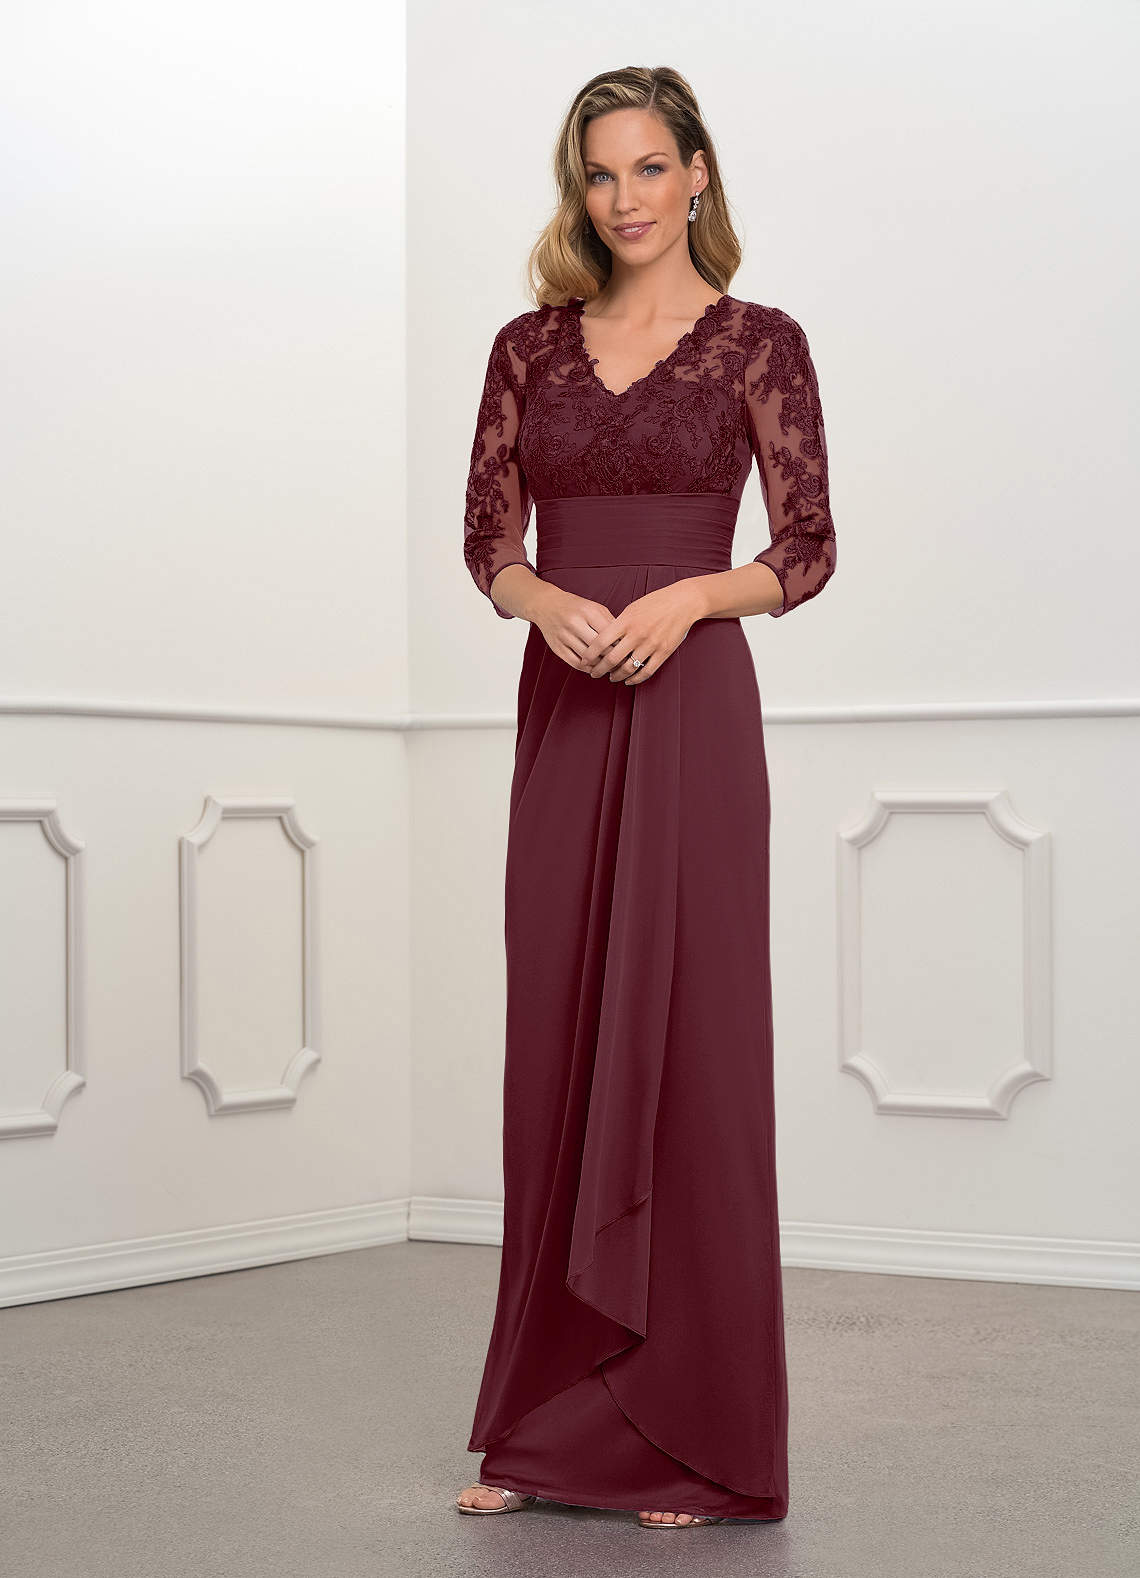 Azazie Poe Mother of the Bride Dresses Sheath Lace Floor-Length Dress image1